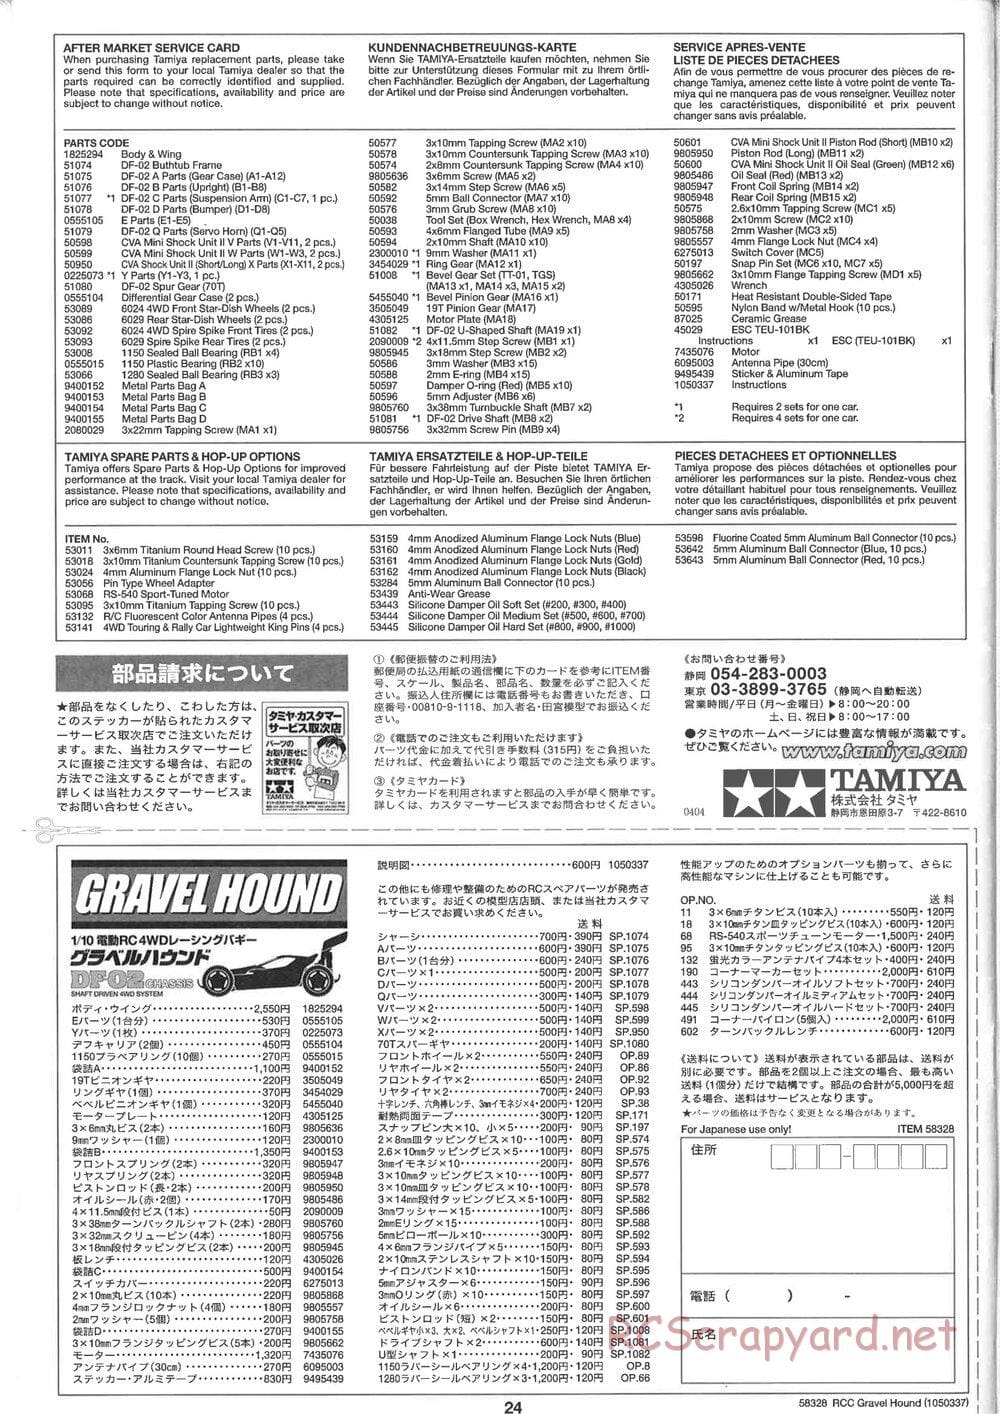 Tamiya - Gravel Hound Chassis - Manual - Page 24